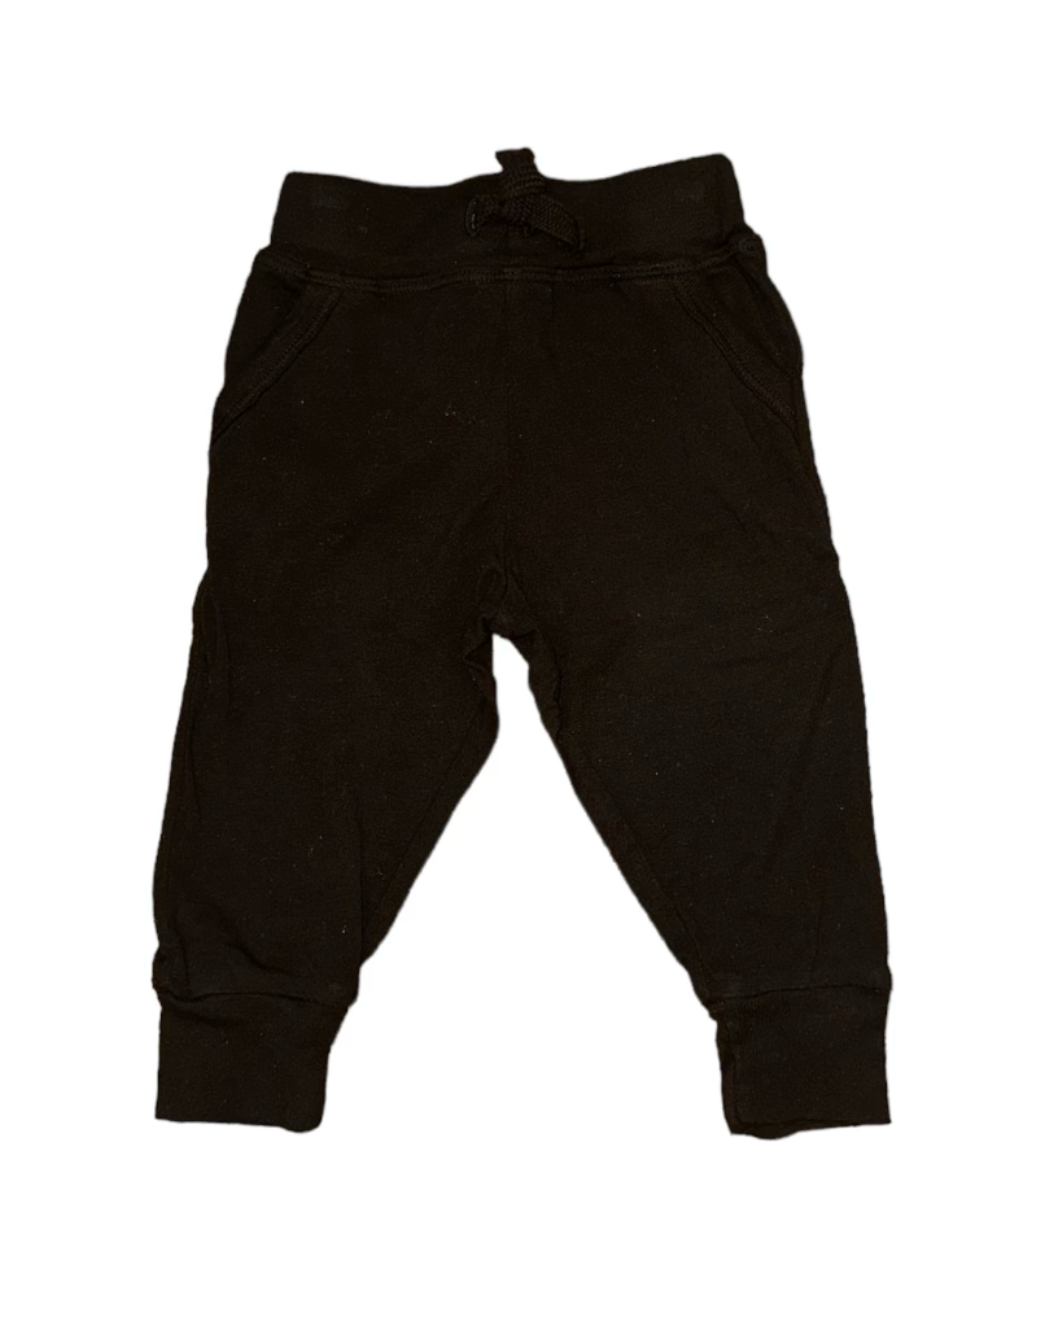 Cozi - Black Sweatpants